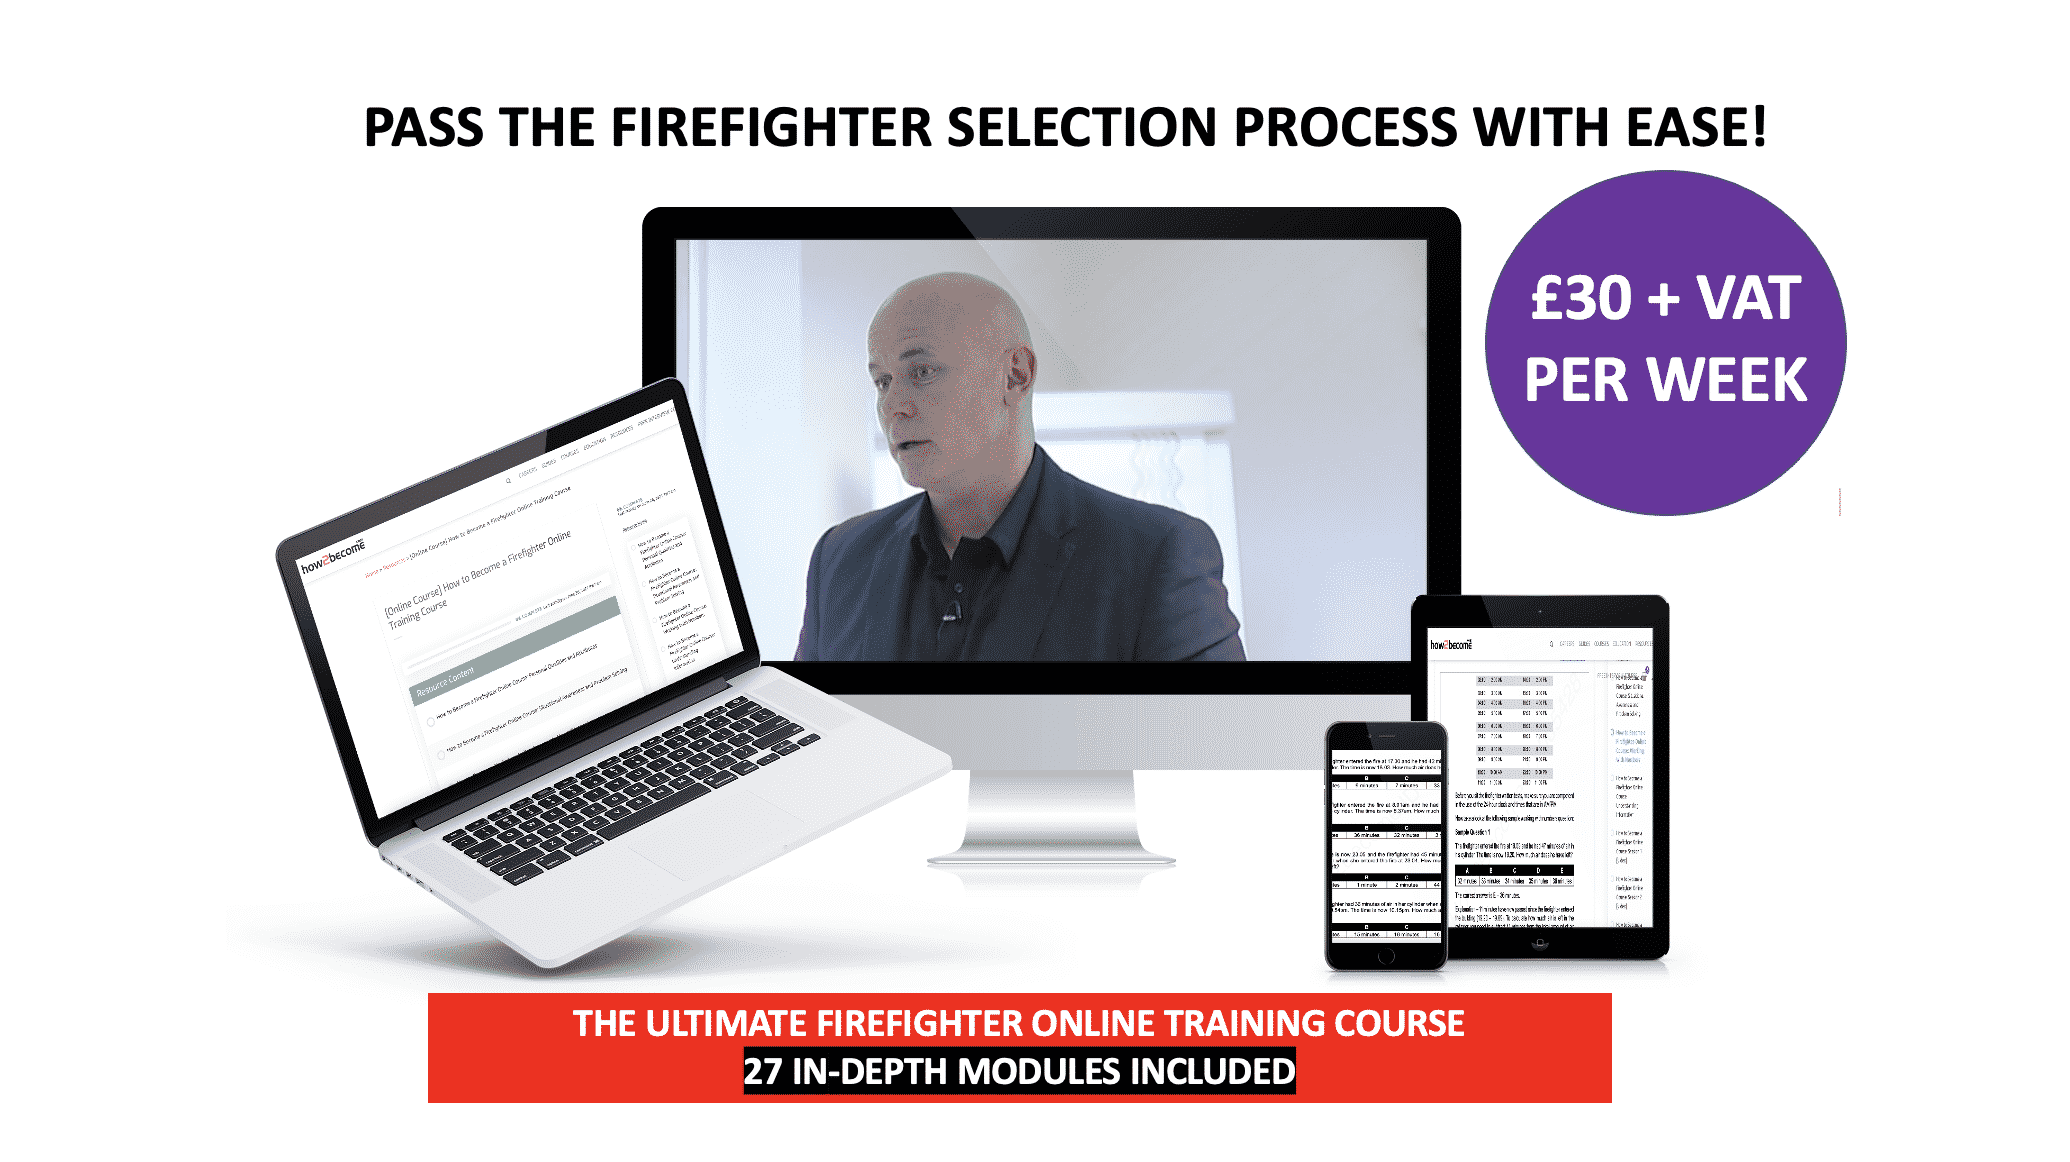 Online firefighter training course £30 per week